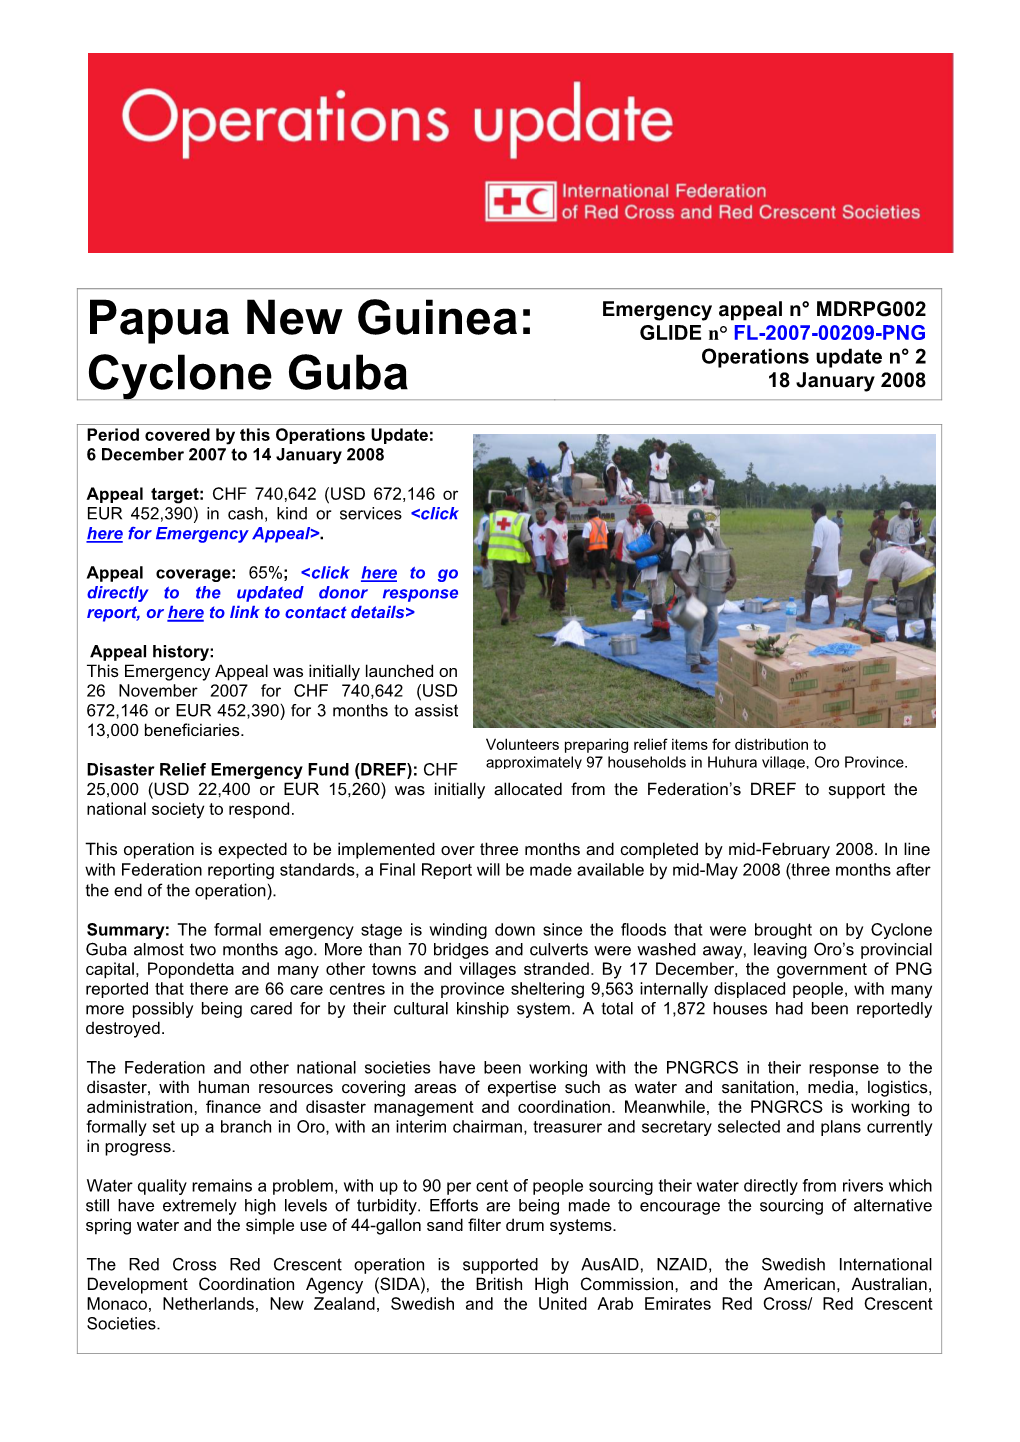 Papua New Guinea: Cyclone Guba; Operations Update No